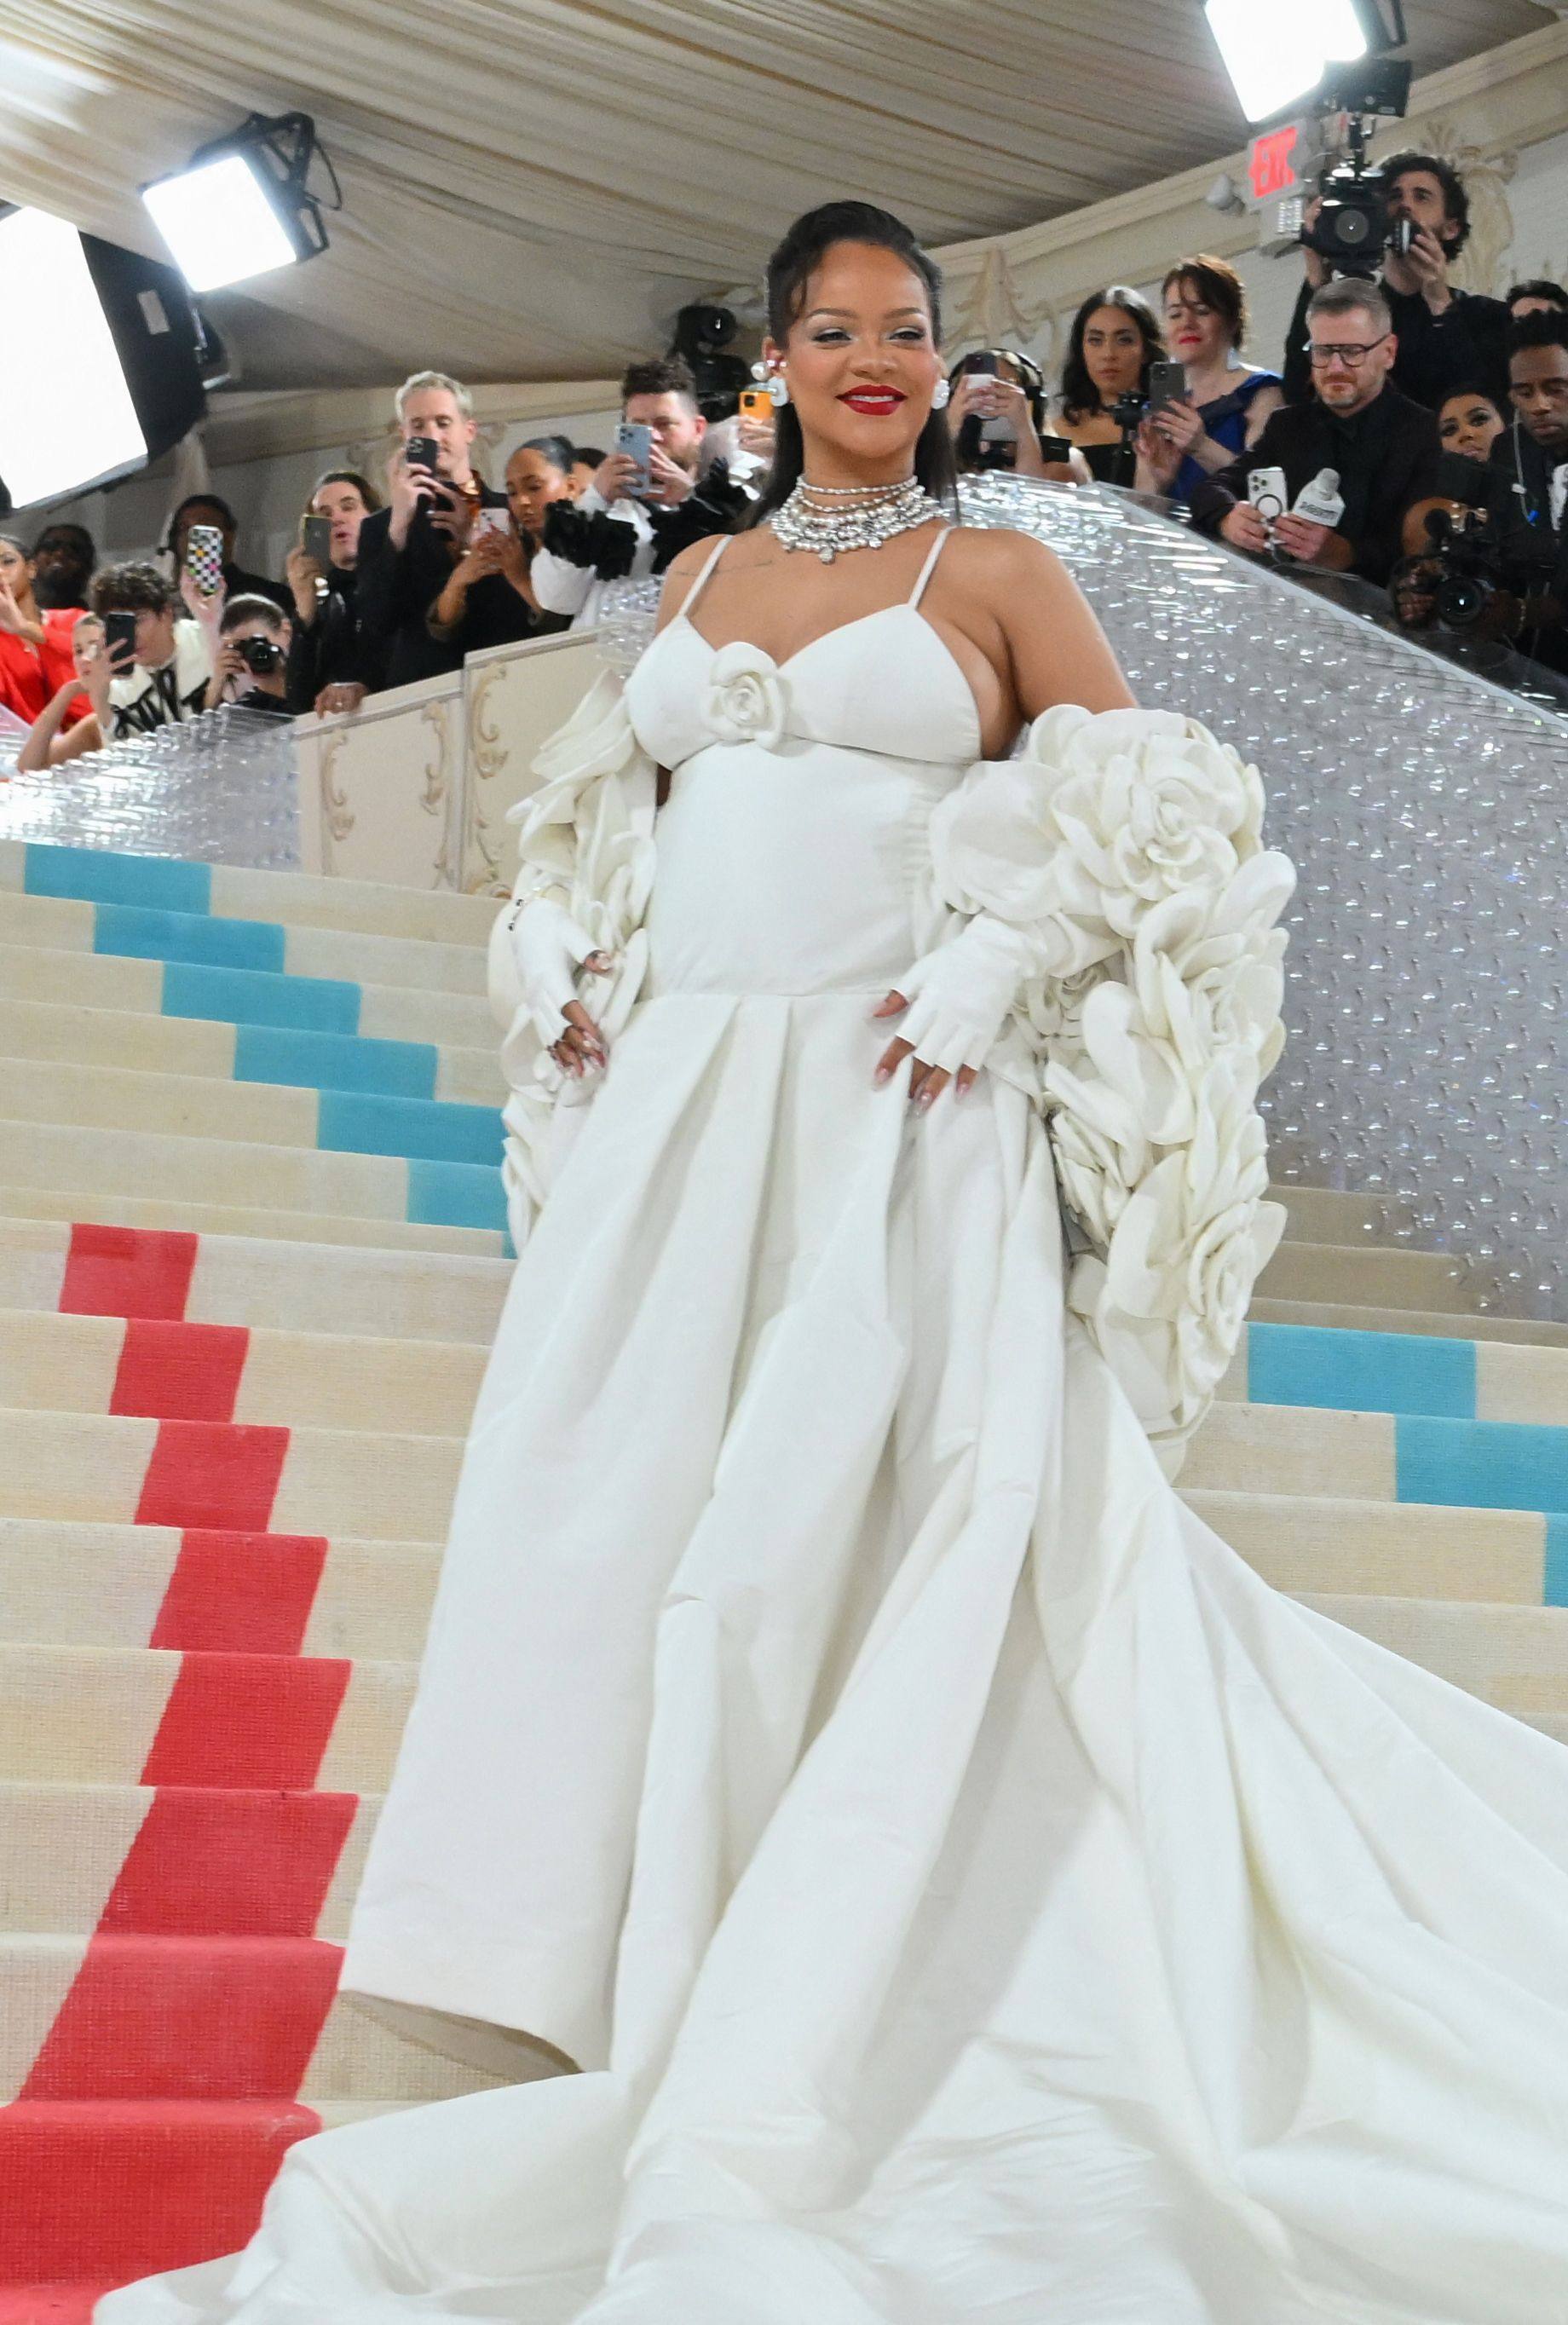 Rihanna wins the Met Gala in 267K Bulgari diamonds, 'Bennifer